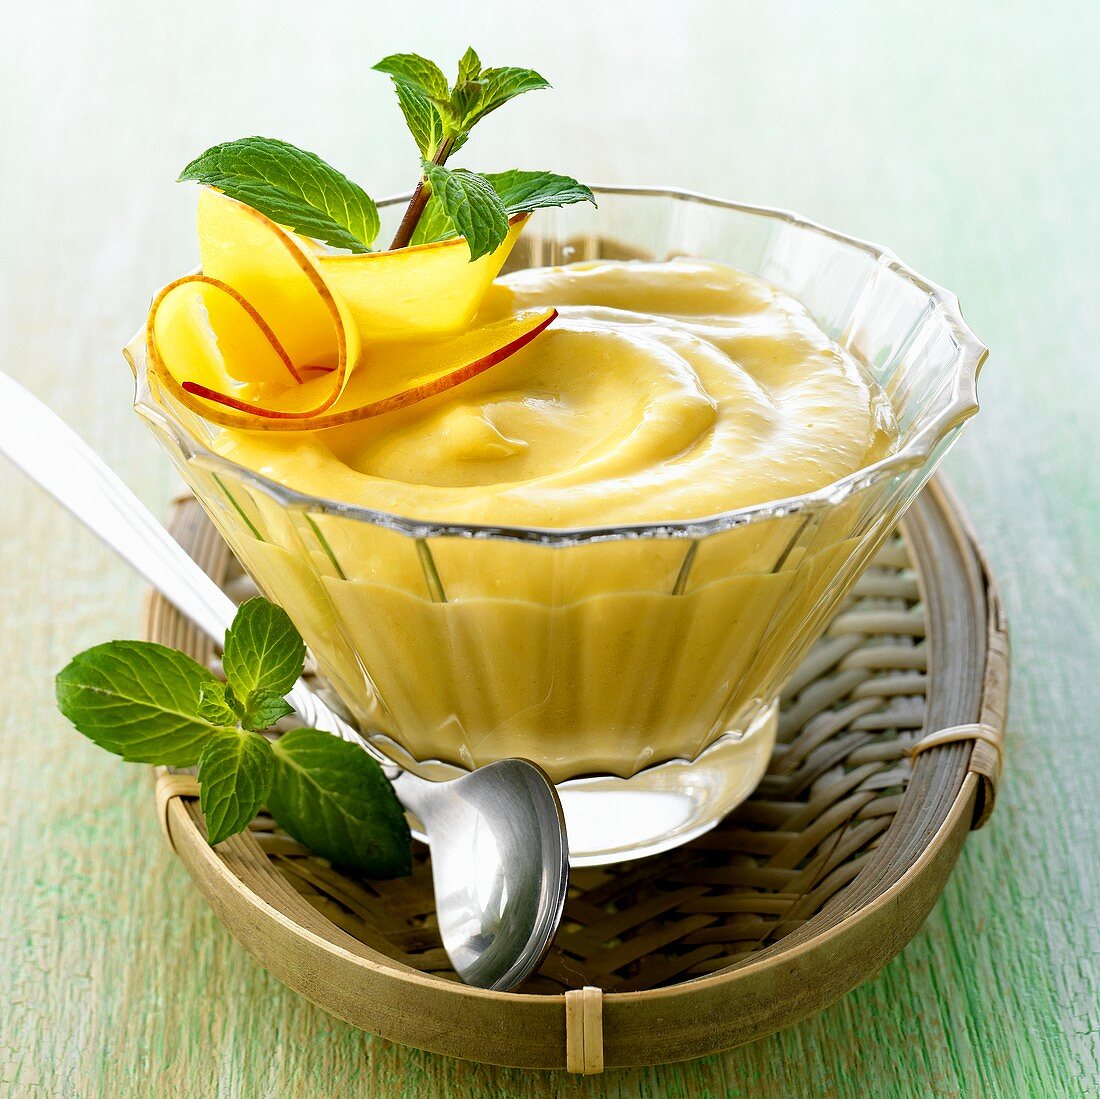 Asian mango cream in small glass bowl